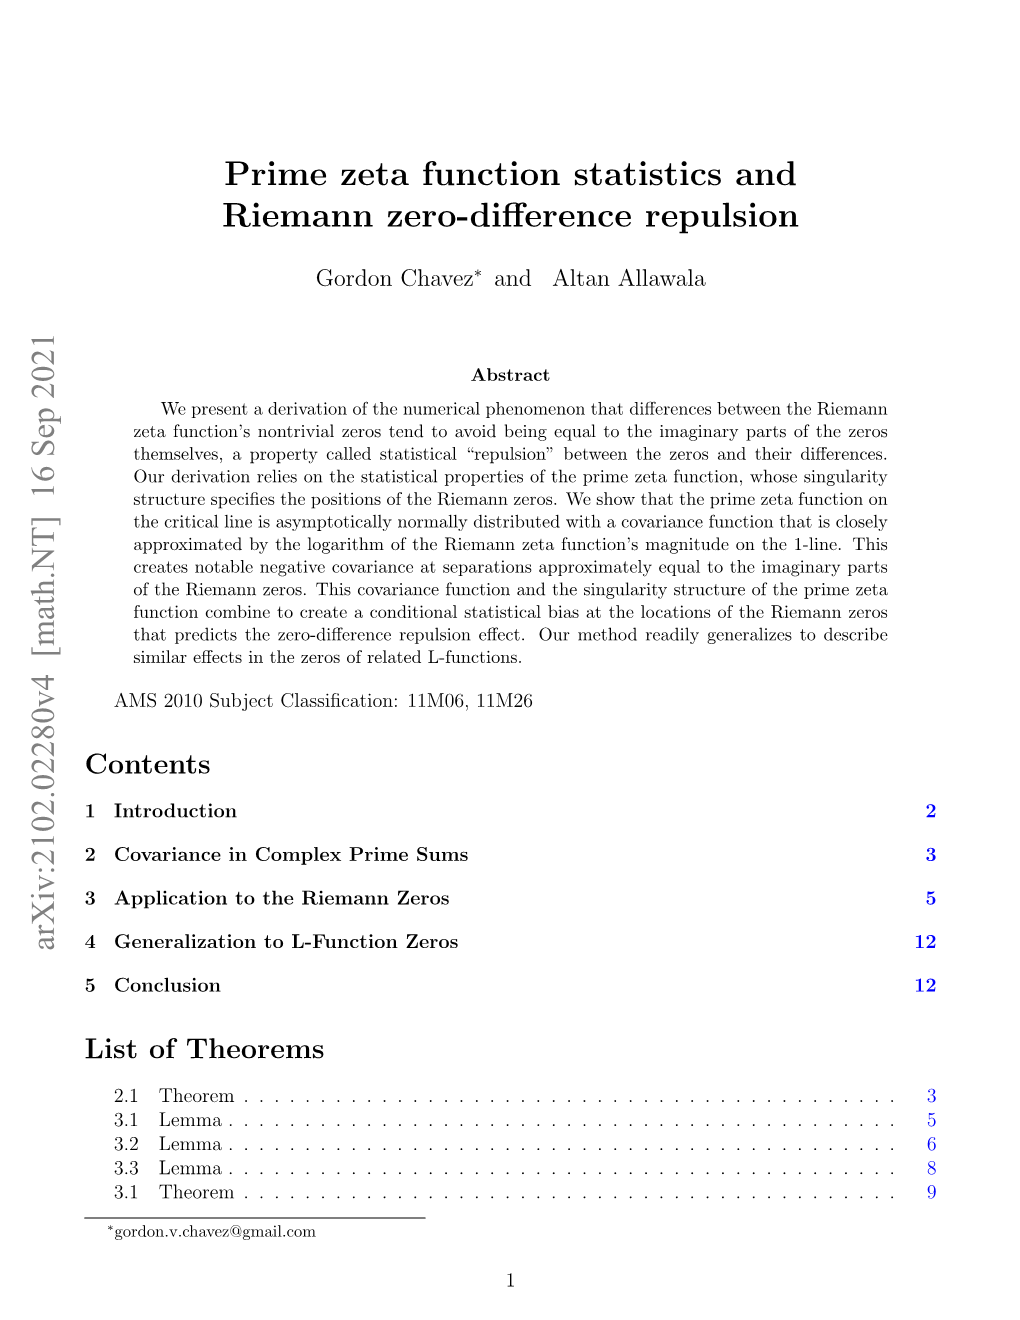 Prime Zeta Function Statistics and Riemann Zero-Difference Repulsion